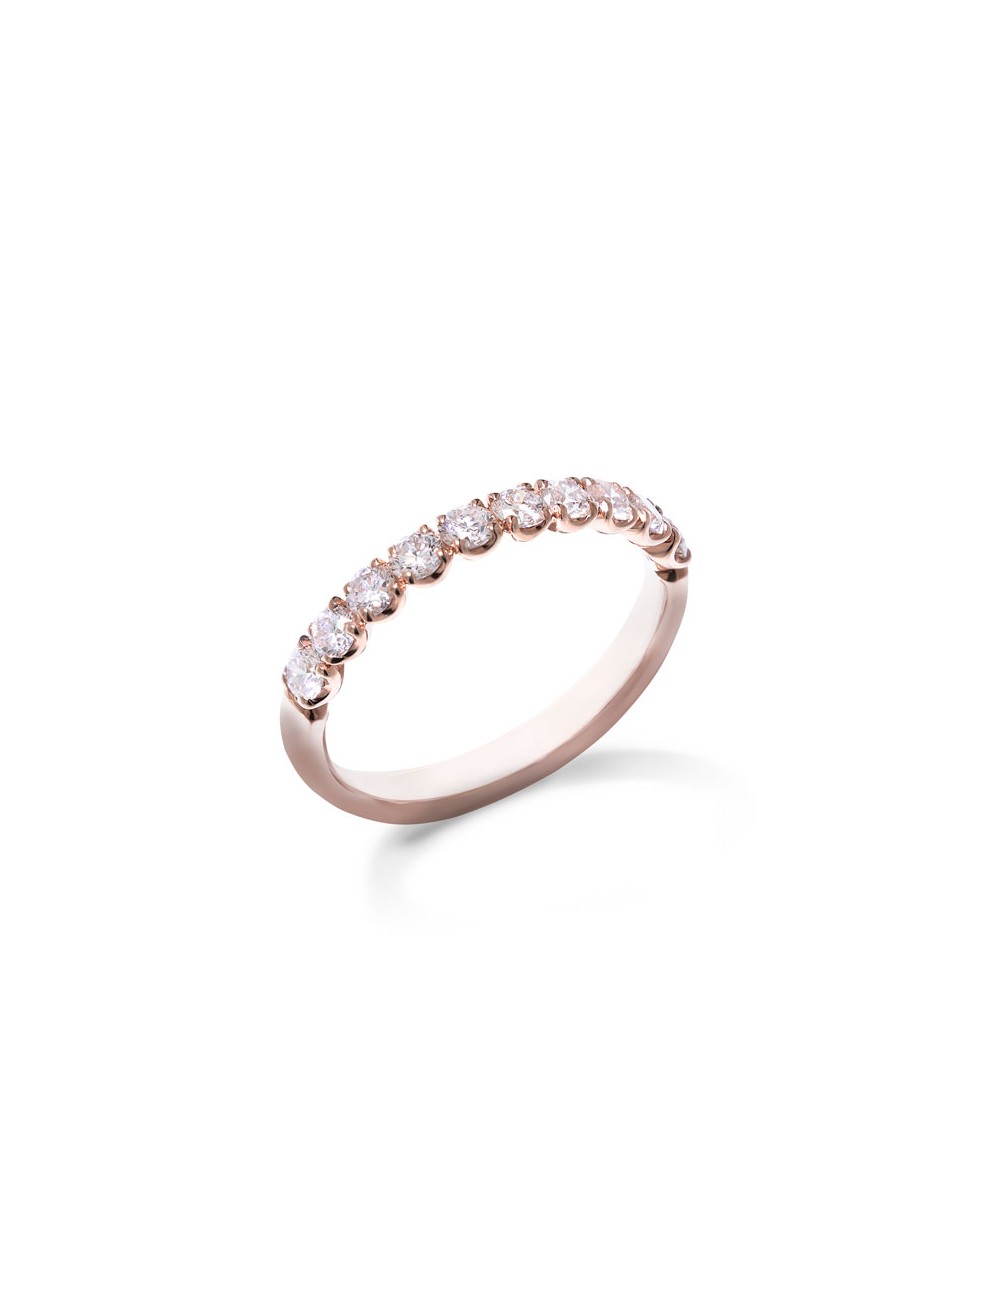 Sardà -Anillo alianza de oro rosa con medio perímetro de diamantes -FA1226R001